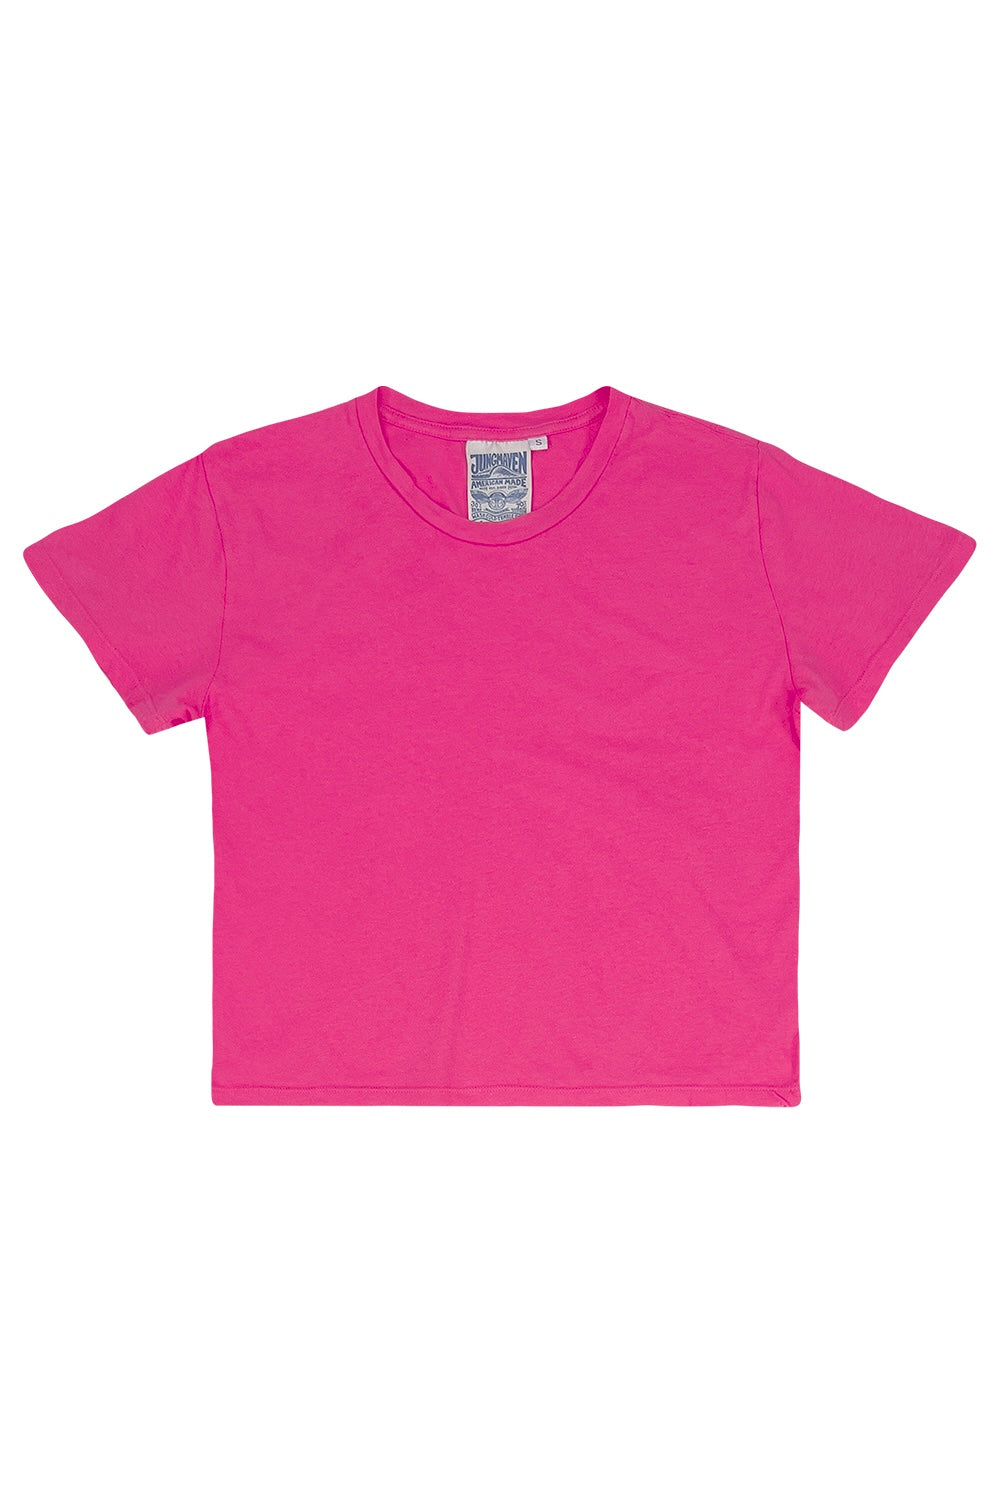 Cropped Ojai Tee | Jungmaven Hemp Clothing & Accessories / Color: Pink Grapefruit